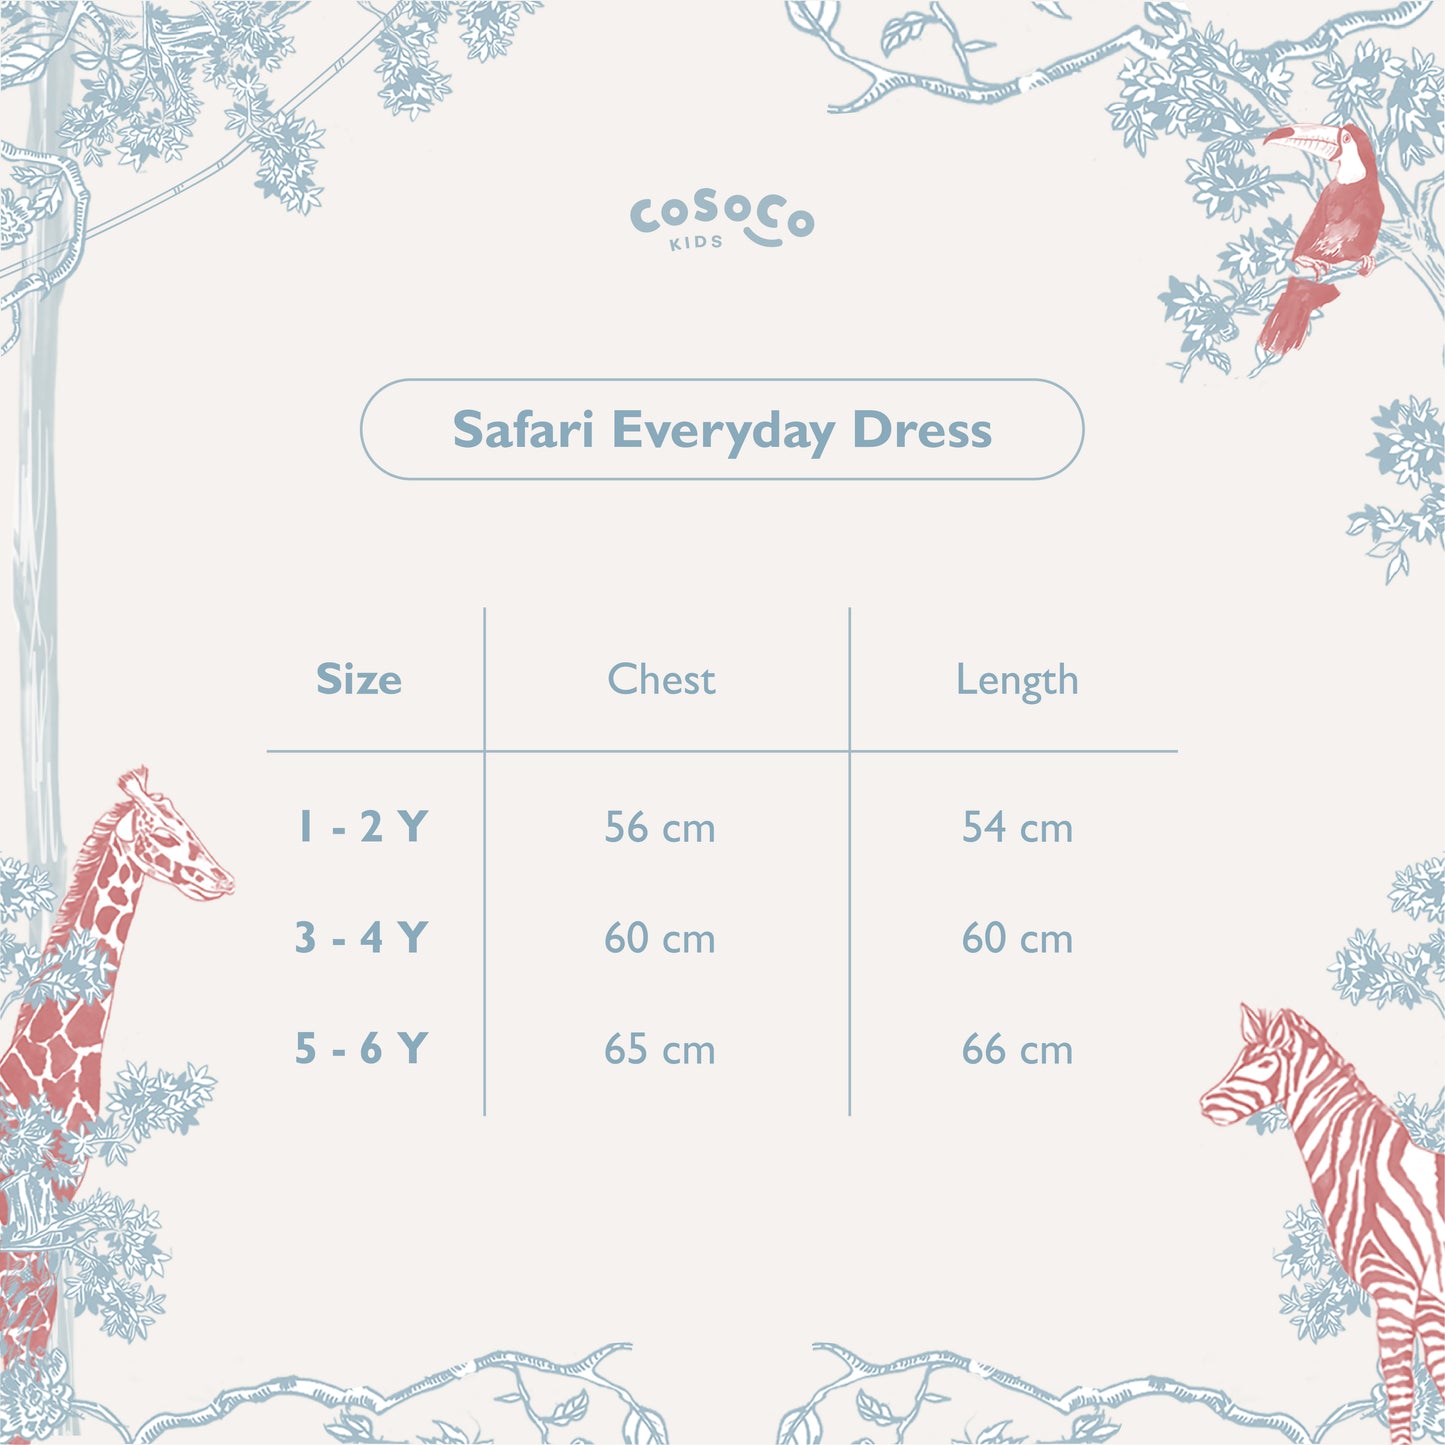 Safari Grey Everyday Dress